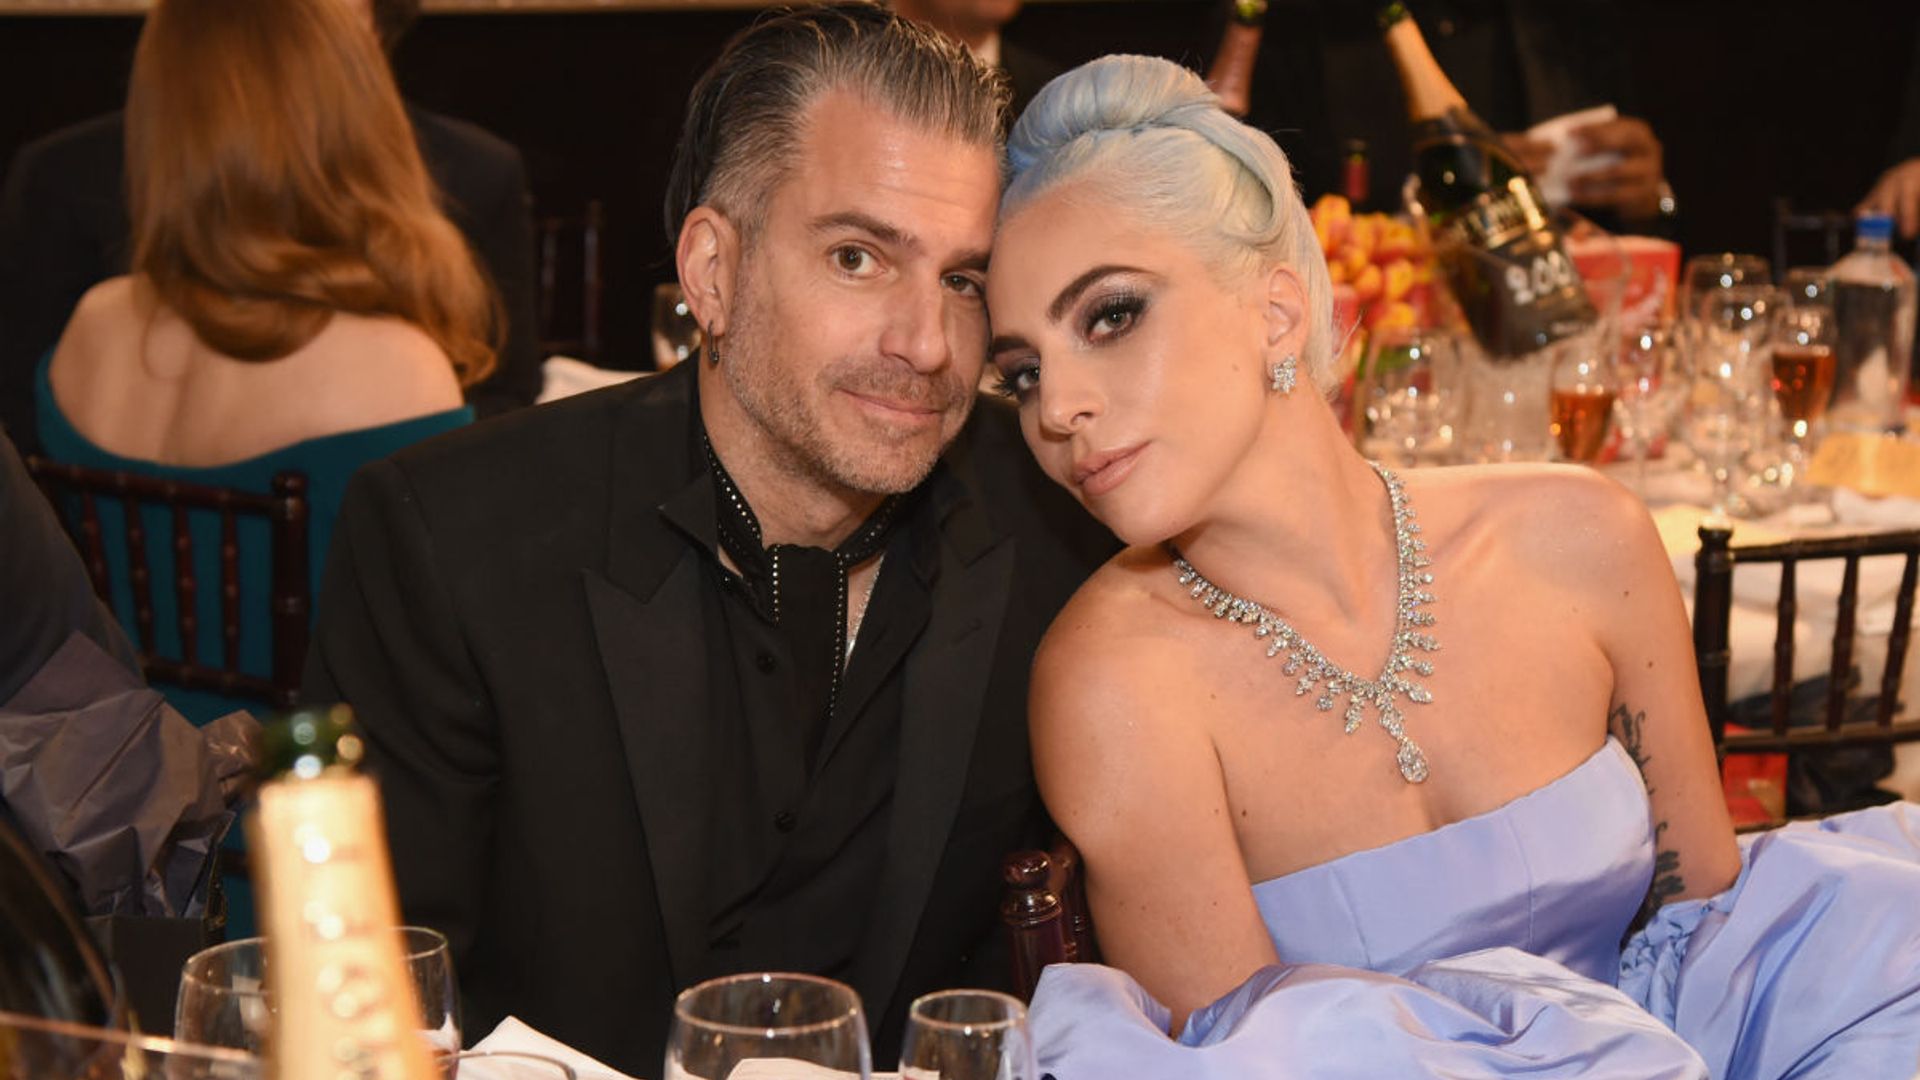 Lady Gaga announces split from fiancé Christian Carino - details